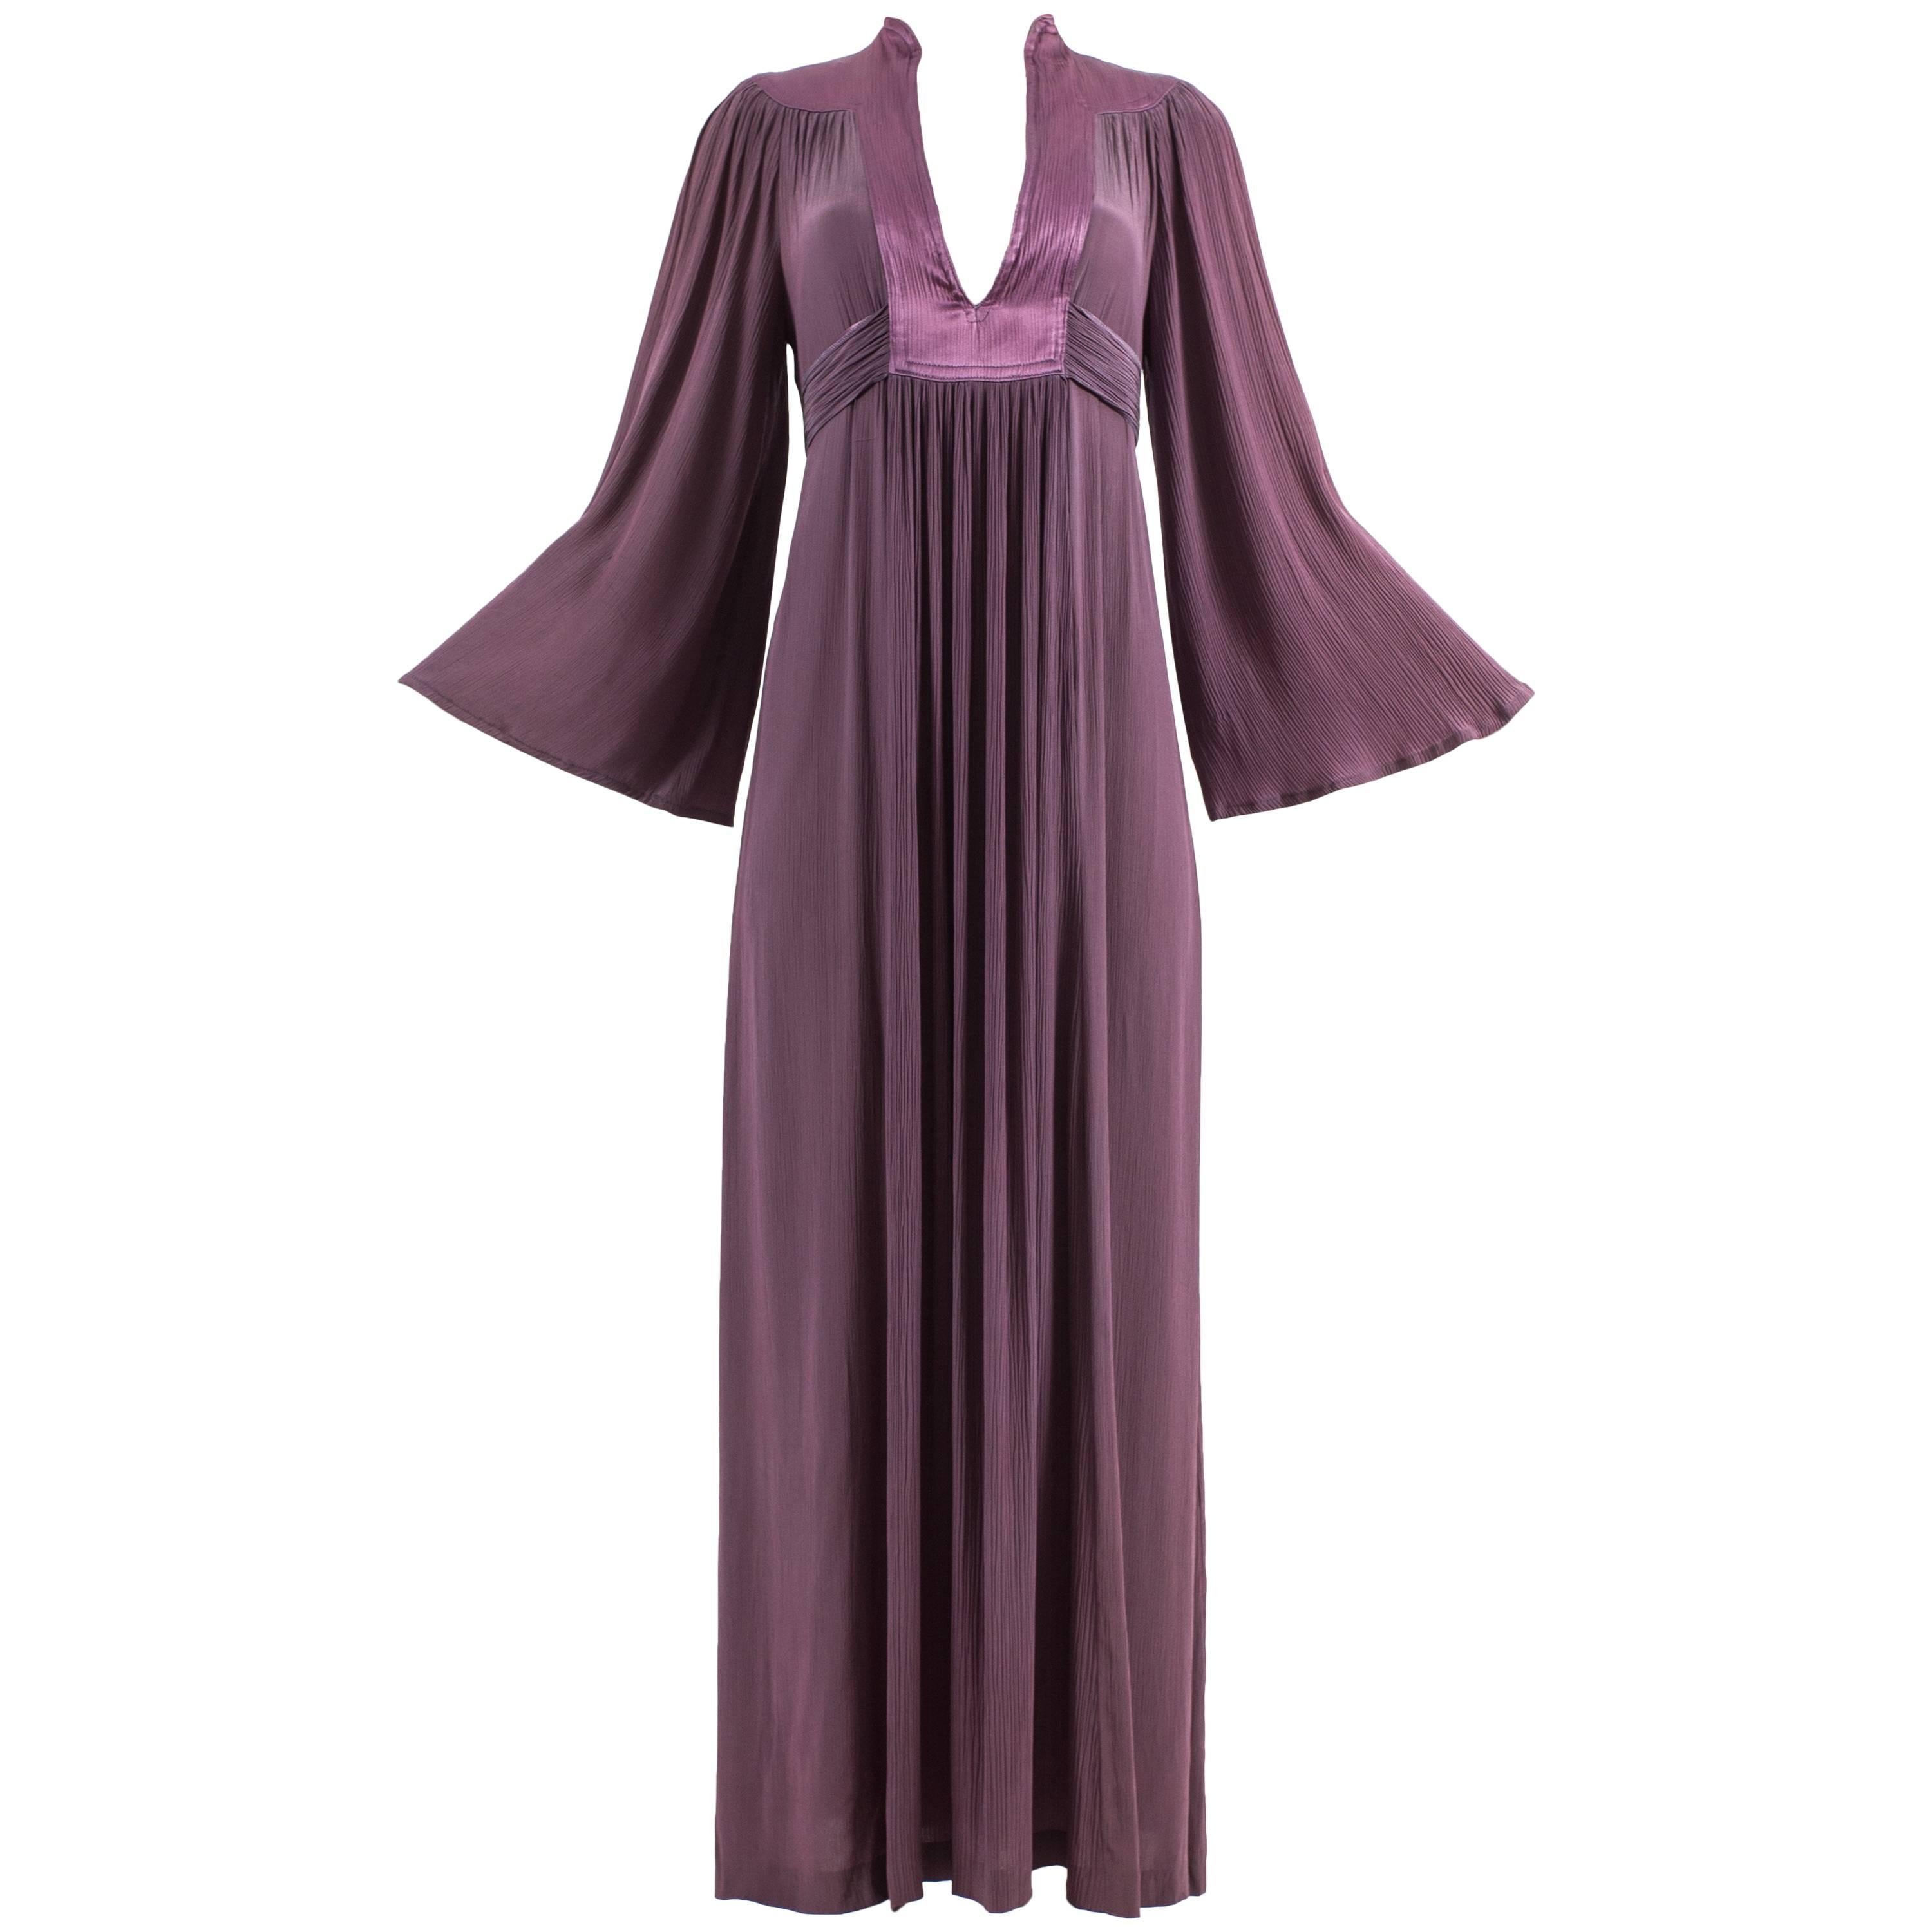 Ossie Clark 1970 pleated purple evening dress